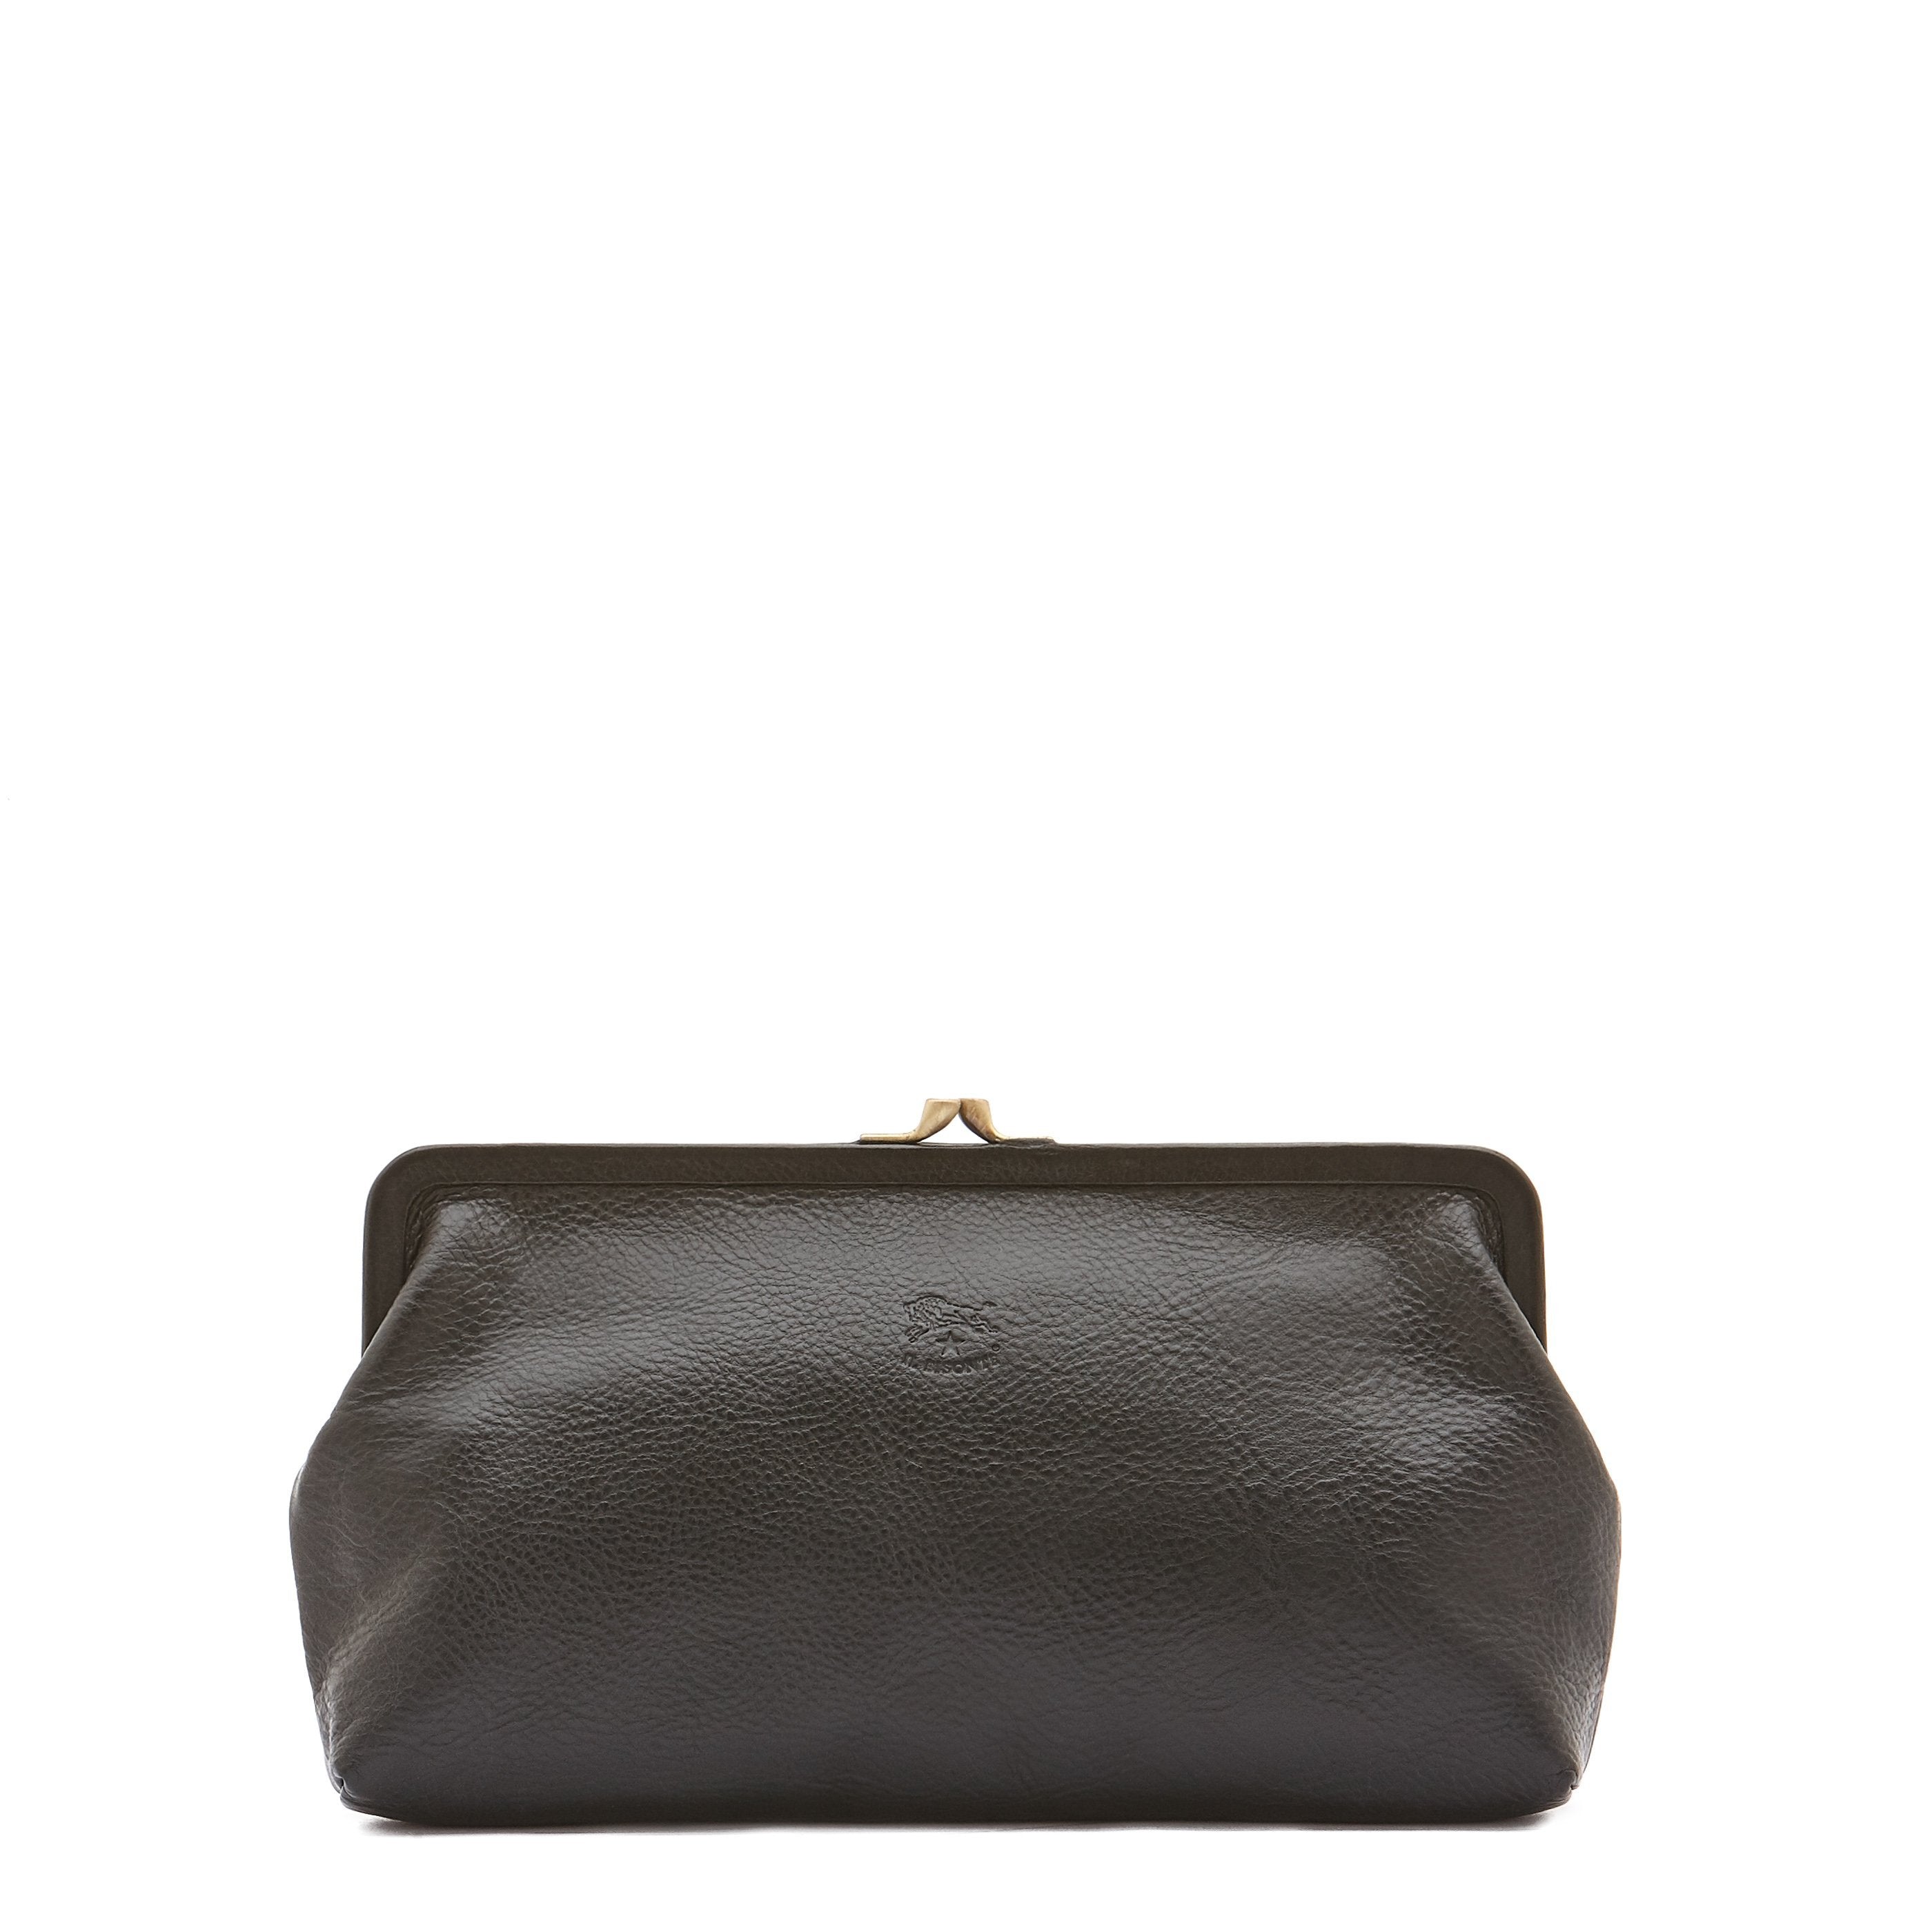 Vintage America COWHIDE Leather Shoulder Handbag Black Coin Purse